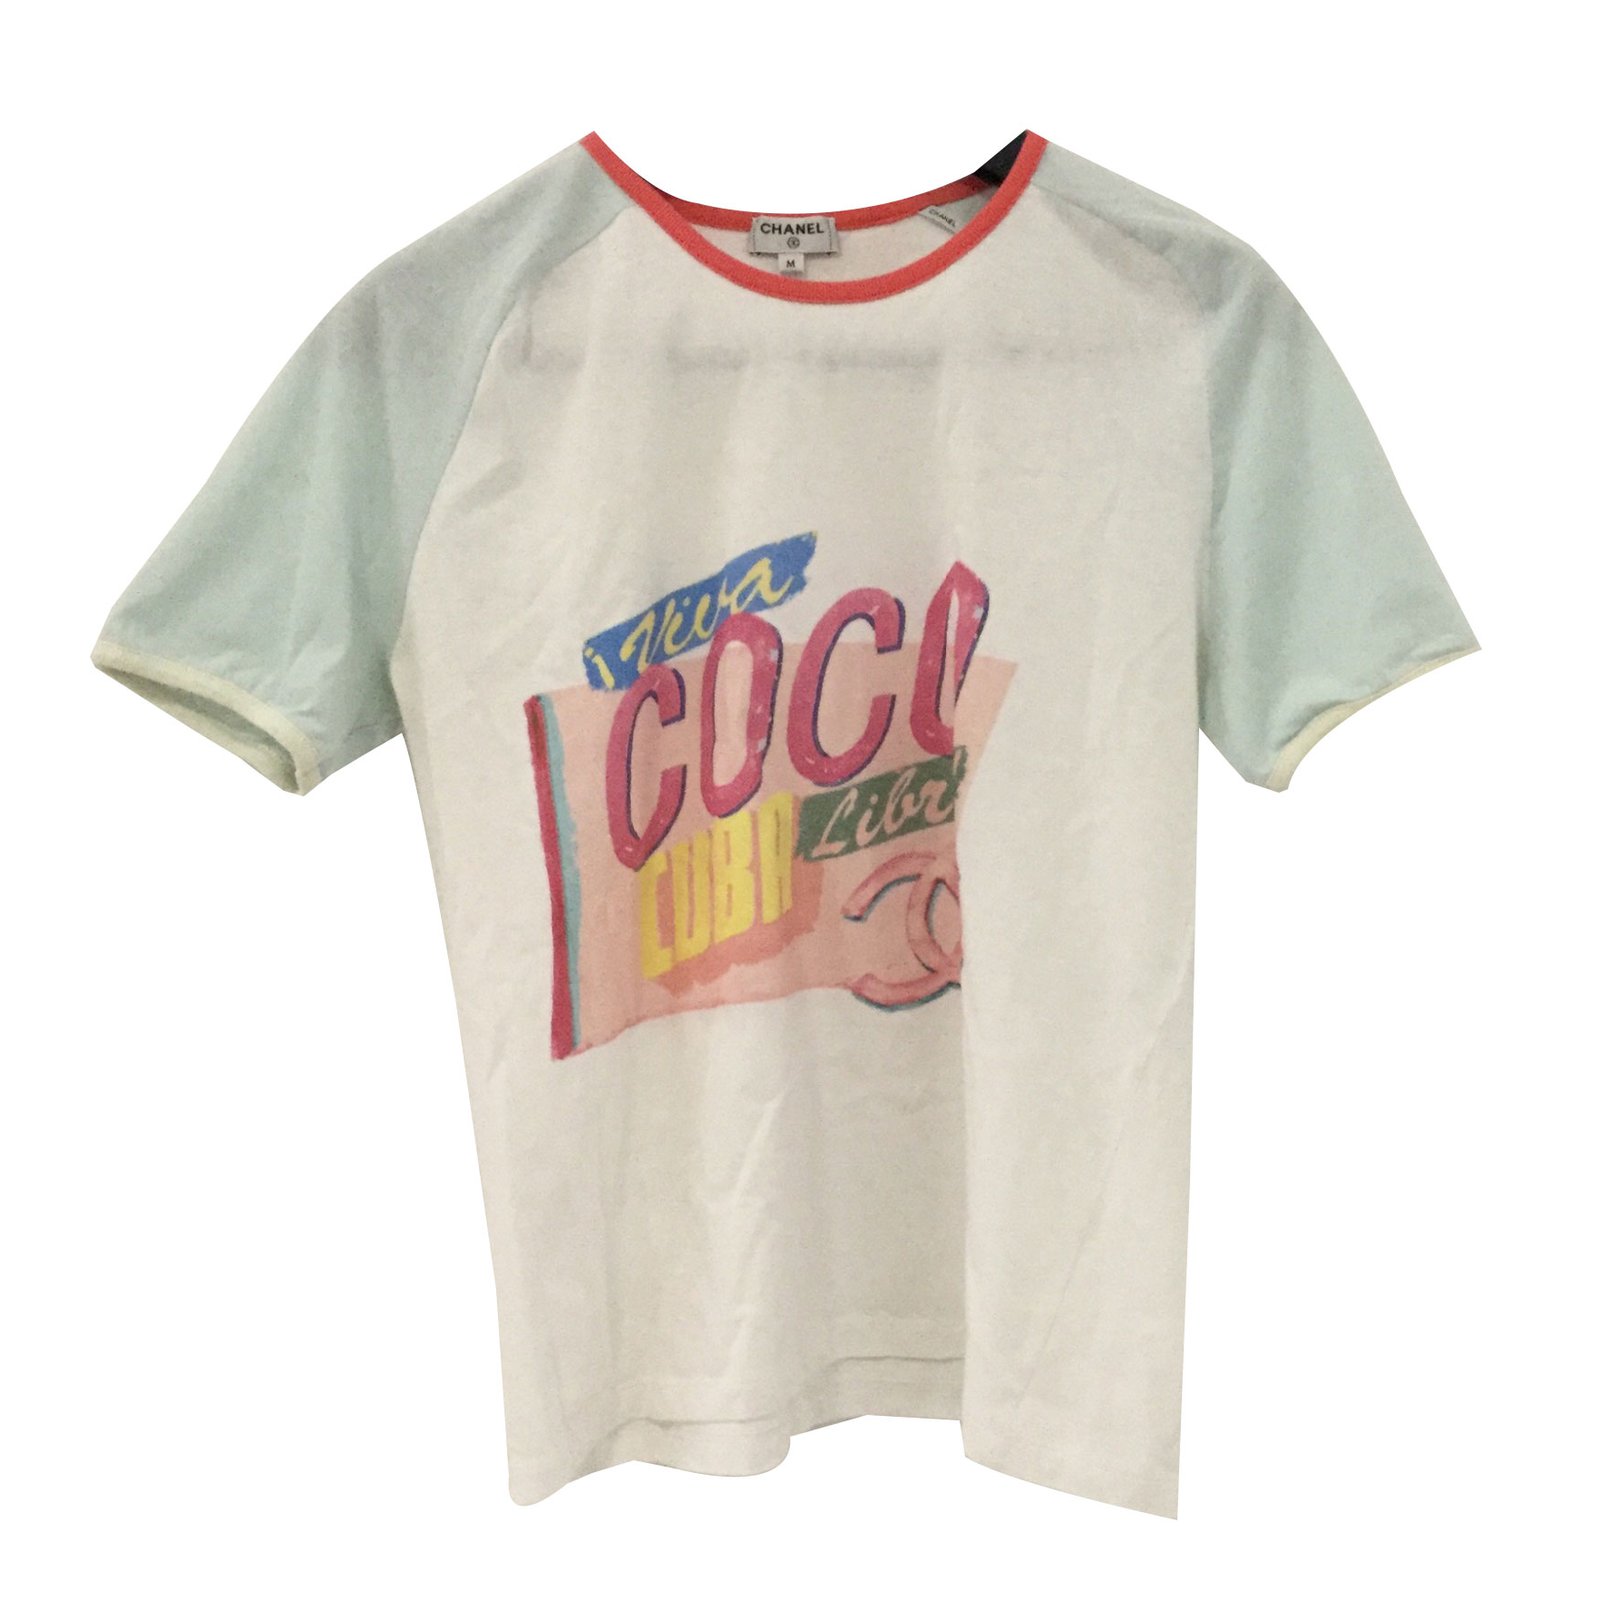 Chanel 2017 Viva Coco Cuba T-Shirt w/ Tags - White Tops, Clothing